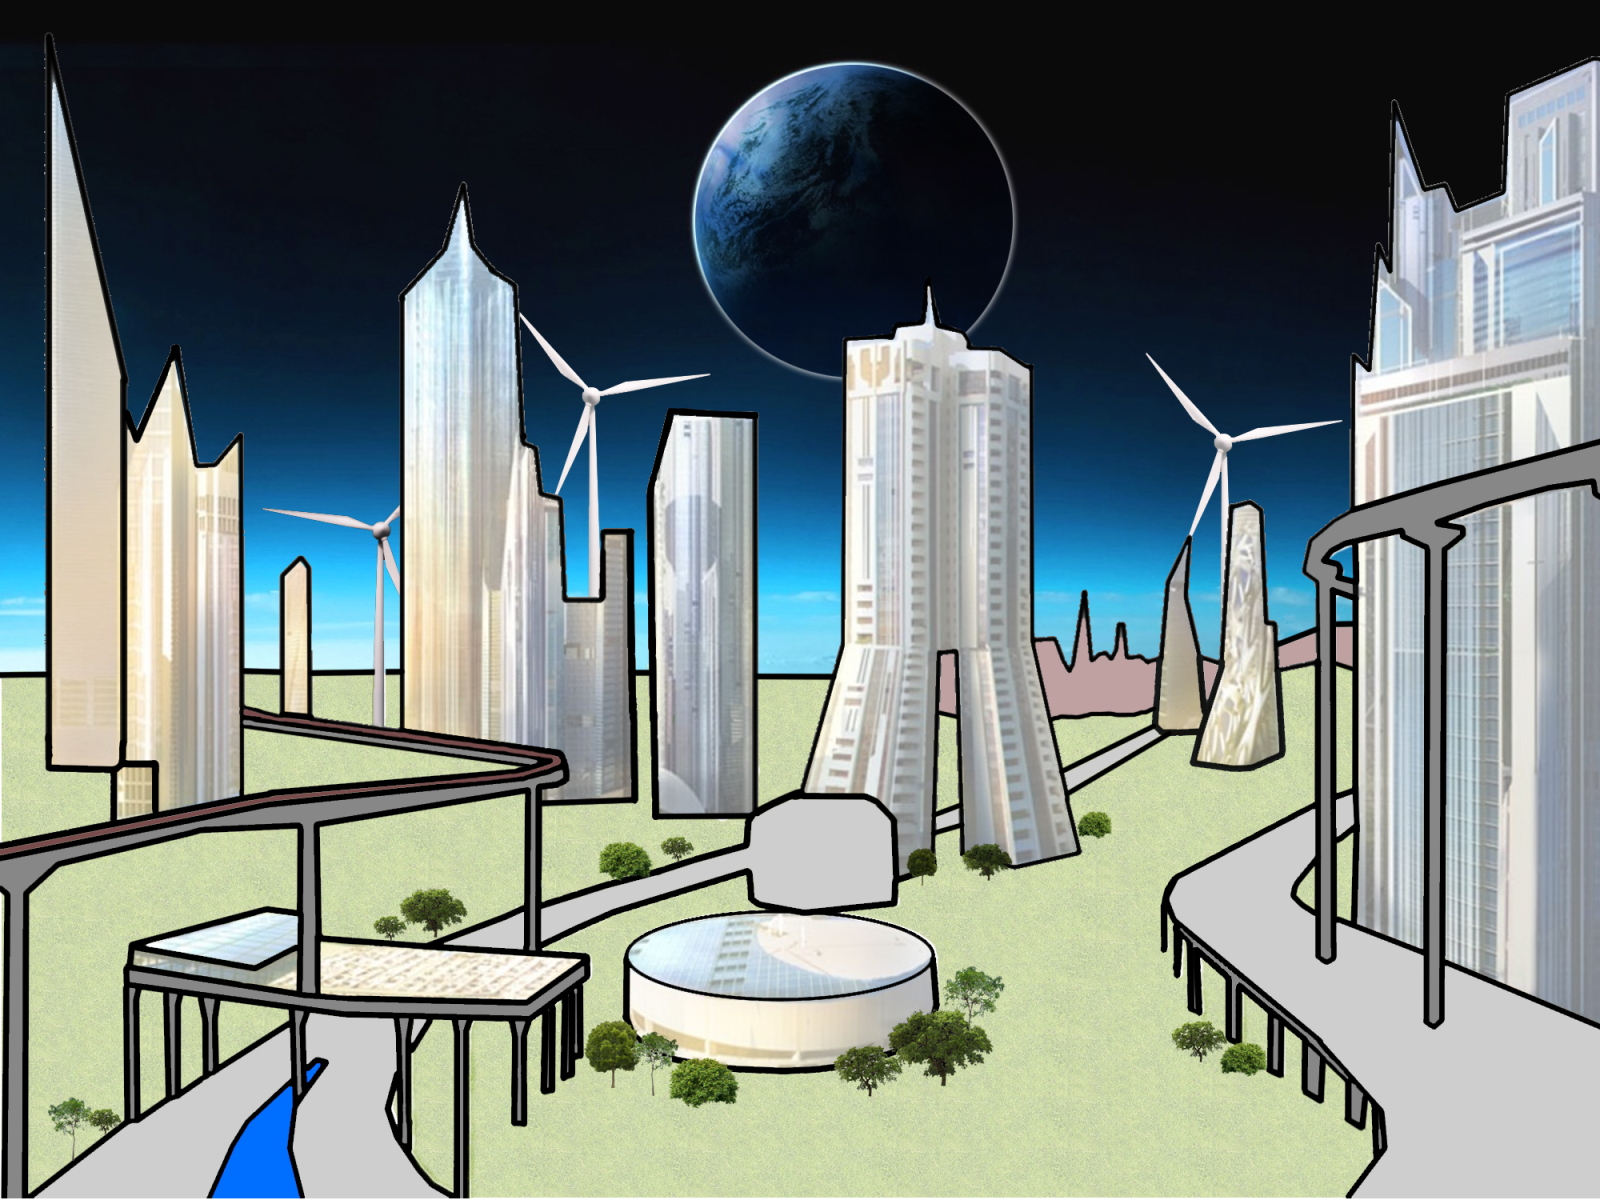 Fantastic City Future Concept Art Illustration Stock Vector Royalty Free  553726930  Shutterstock